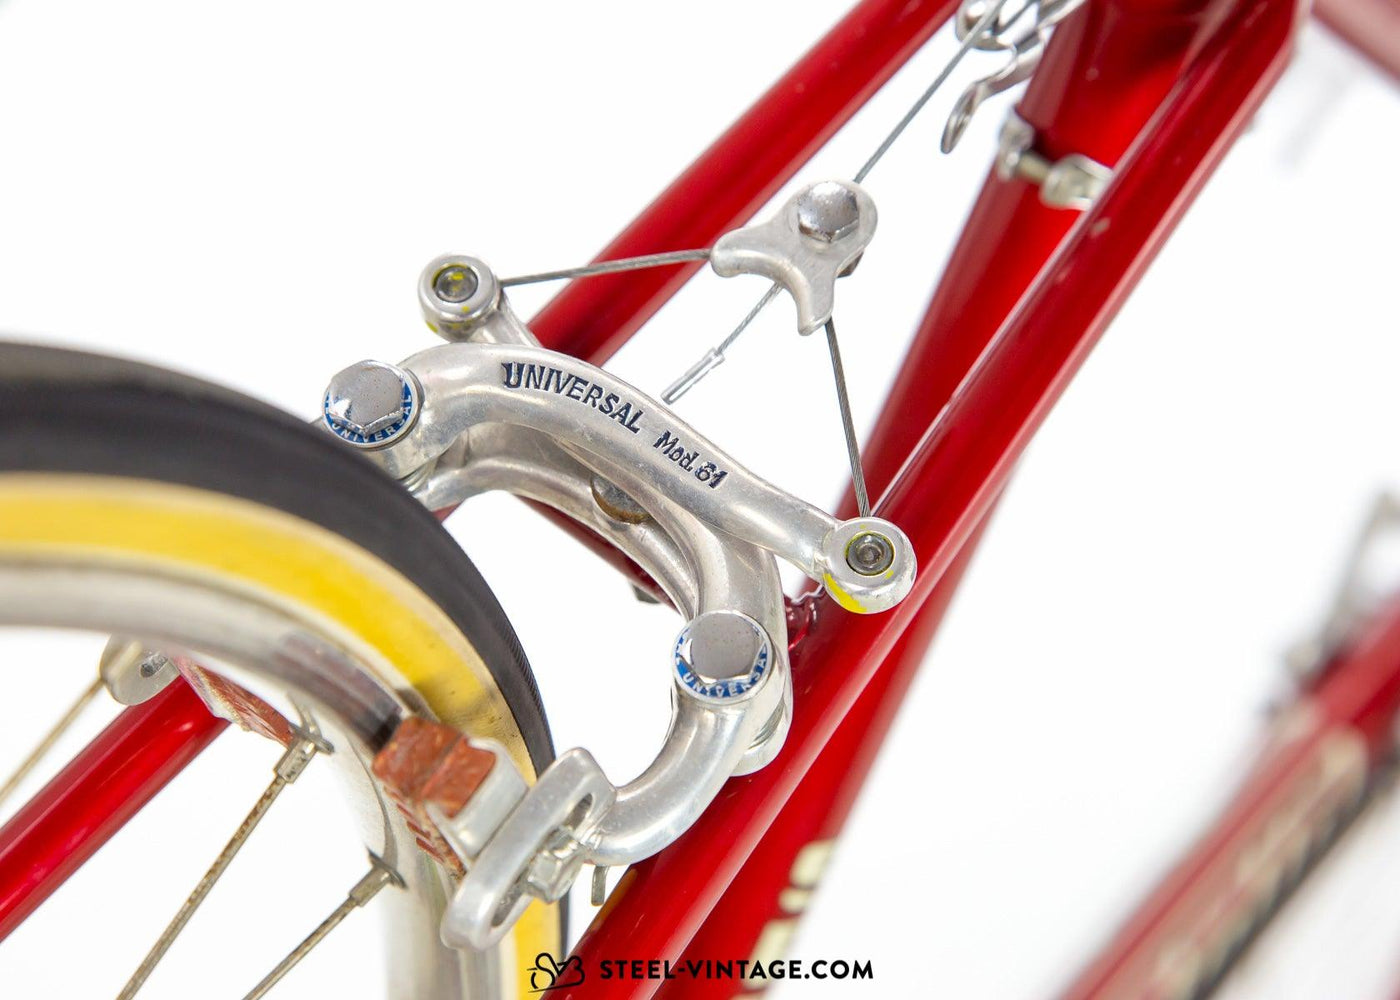 Patelli Classic Road Bike 1970 - Steel Vintage Bikes